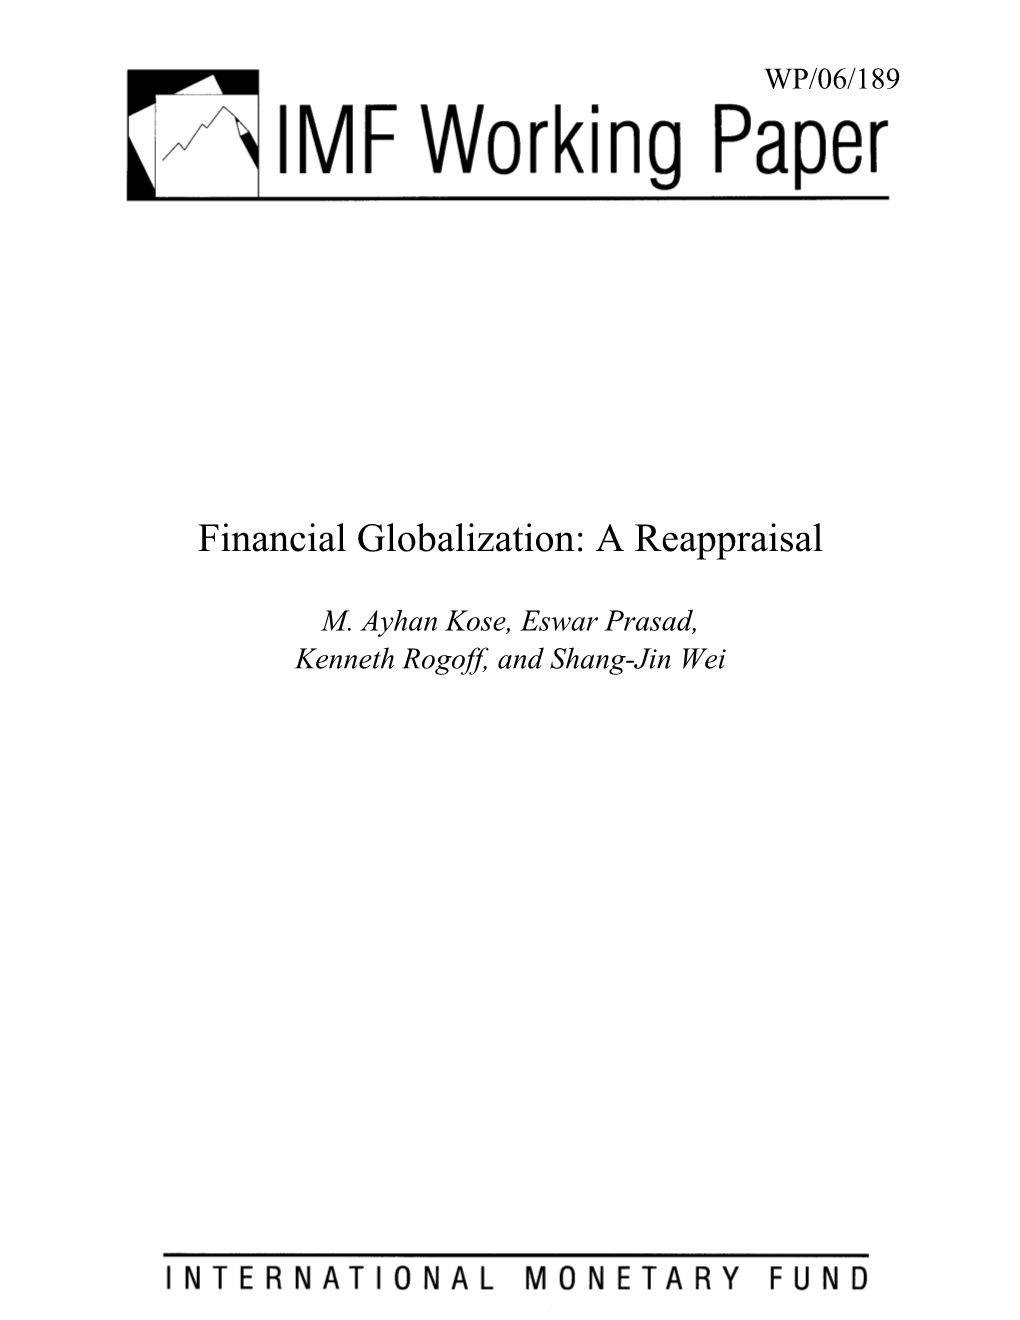 Financial Globalization: a Reappraisal; M. Ayhan Kose, Eswar Prasad